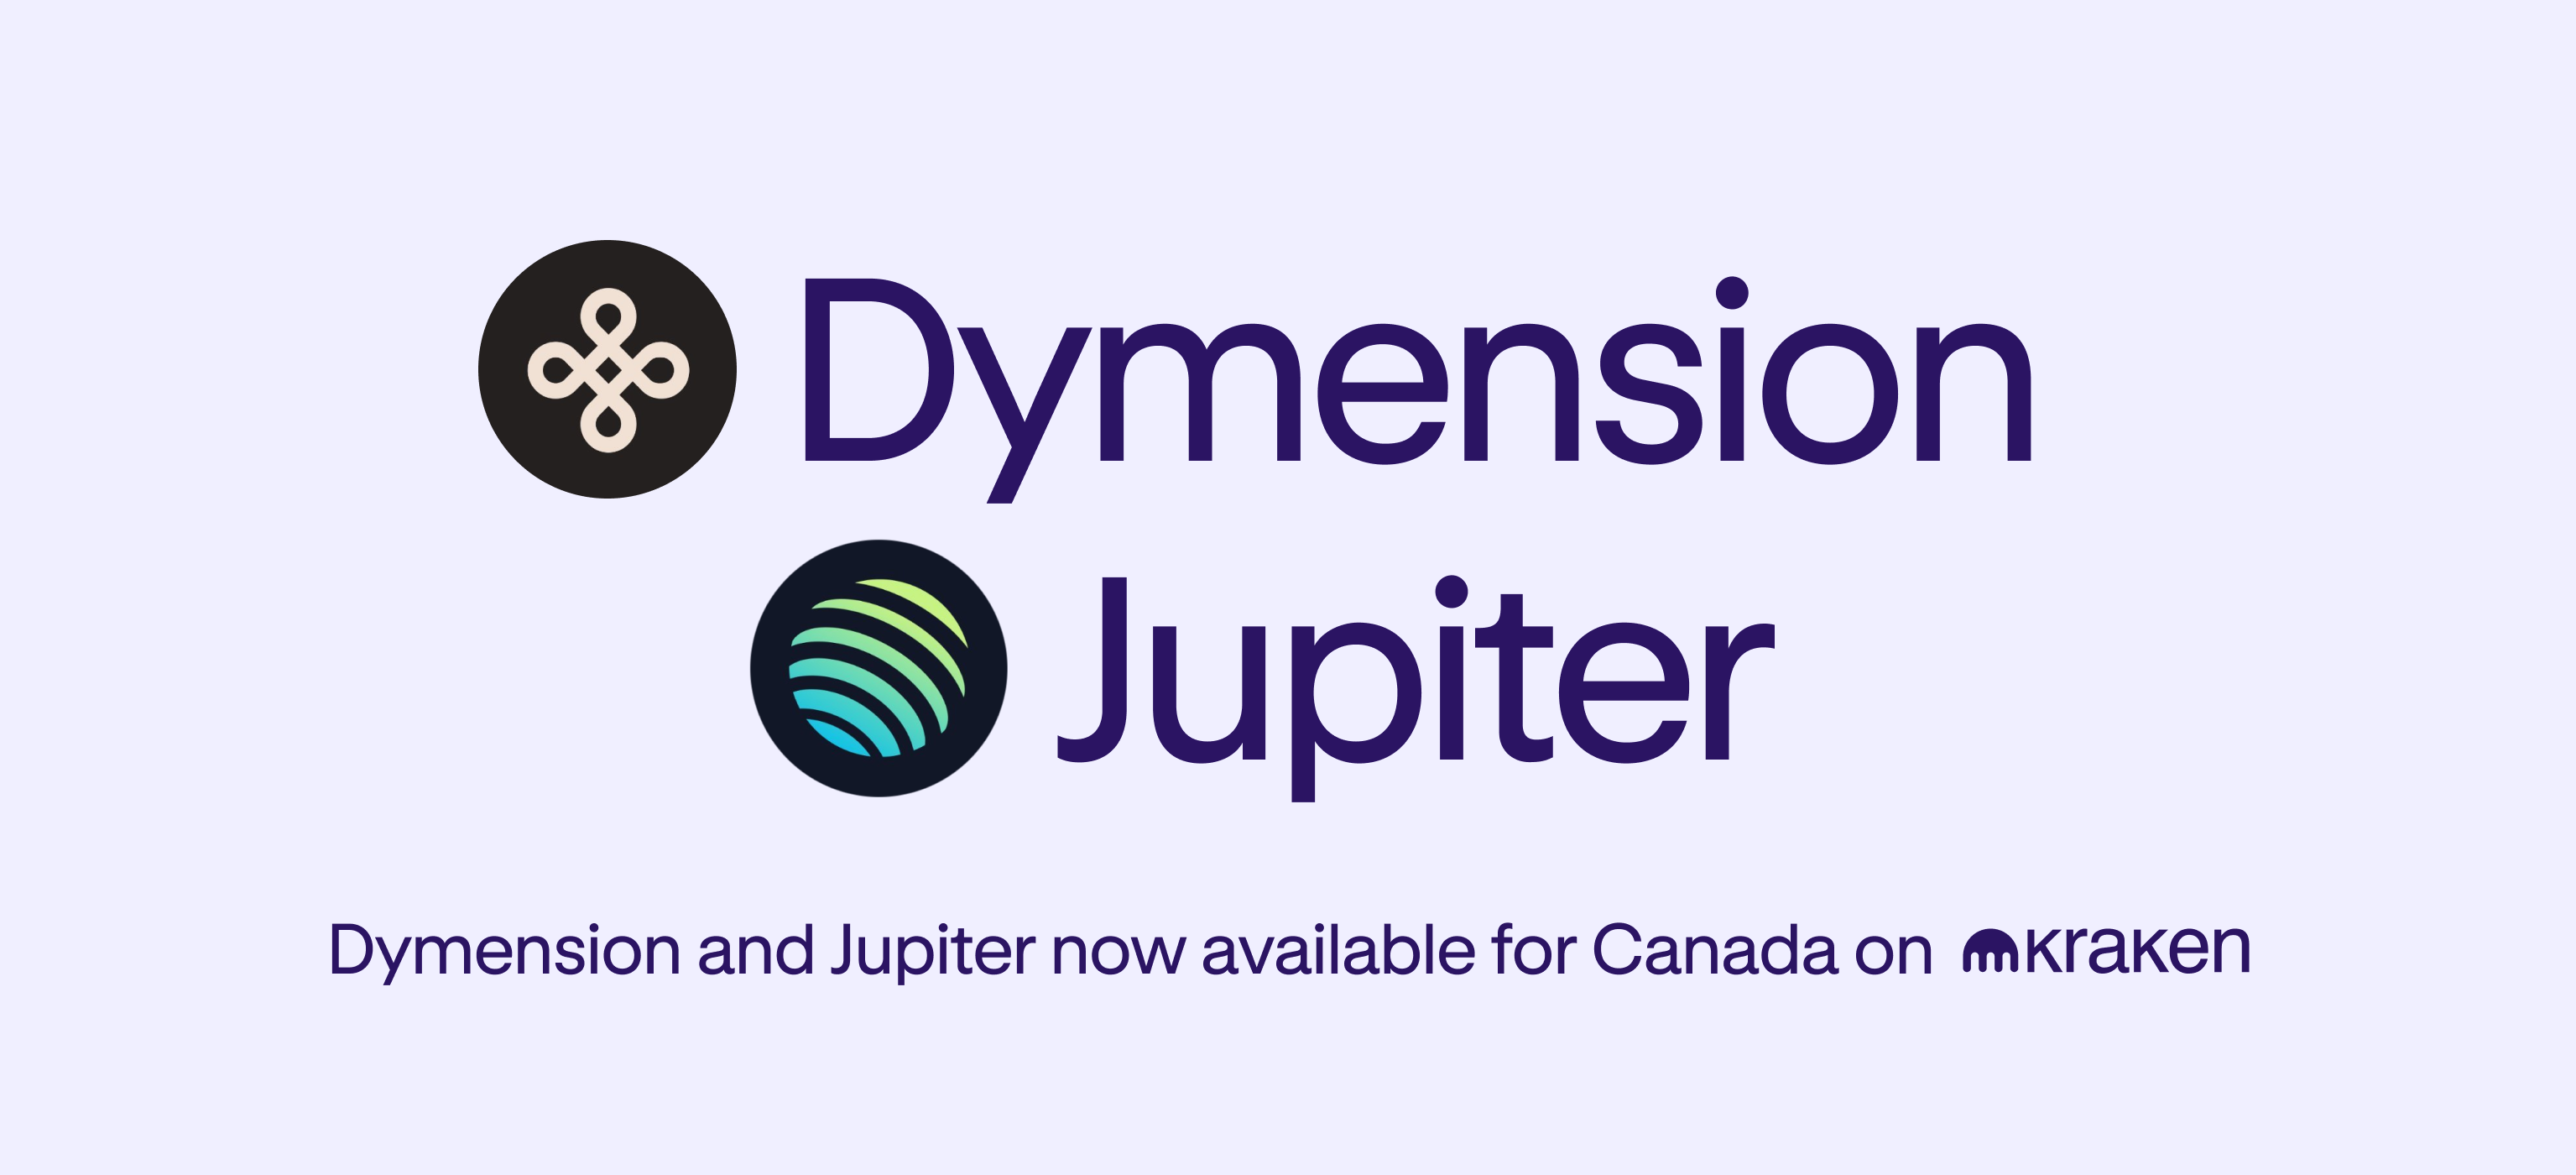 Dymension (DYM) 和 Jupiter (JUP) 交易现已在加拿大开始